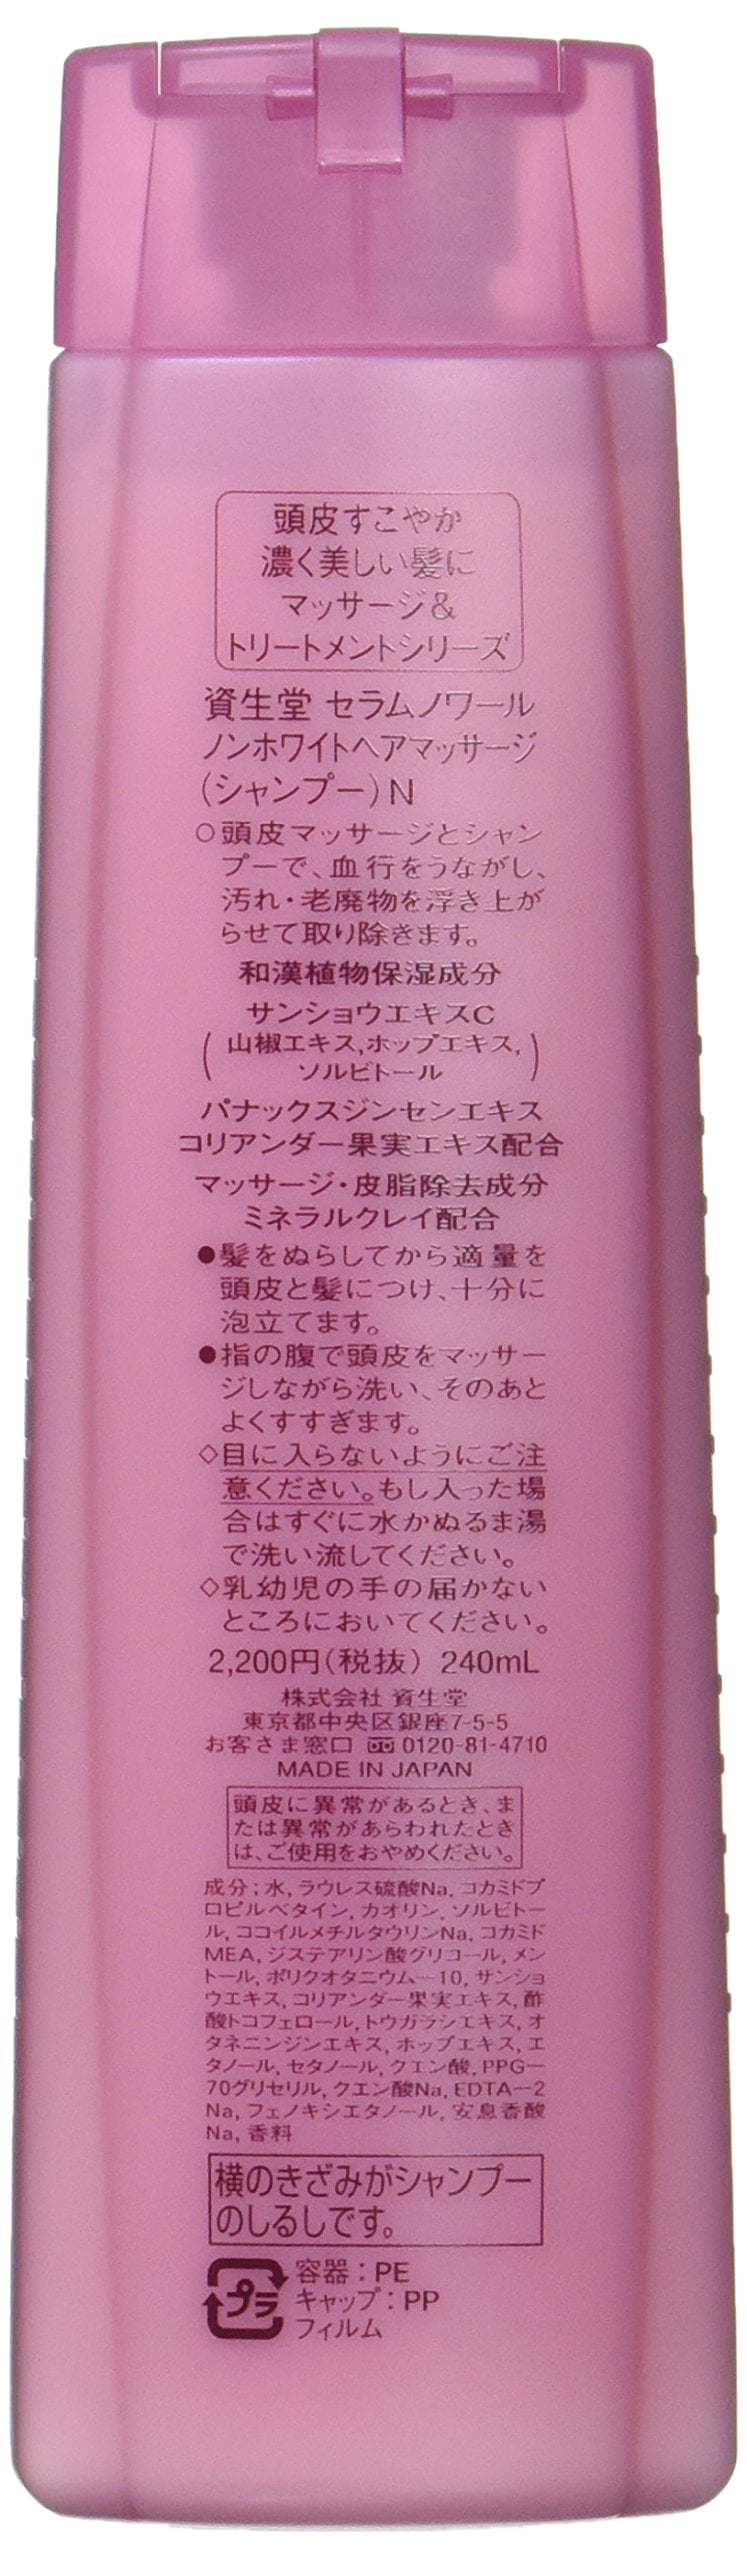 SHISEIDO Serum Noir Non-White Hair Massage (Shampoo) N - Walmart.com